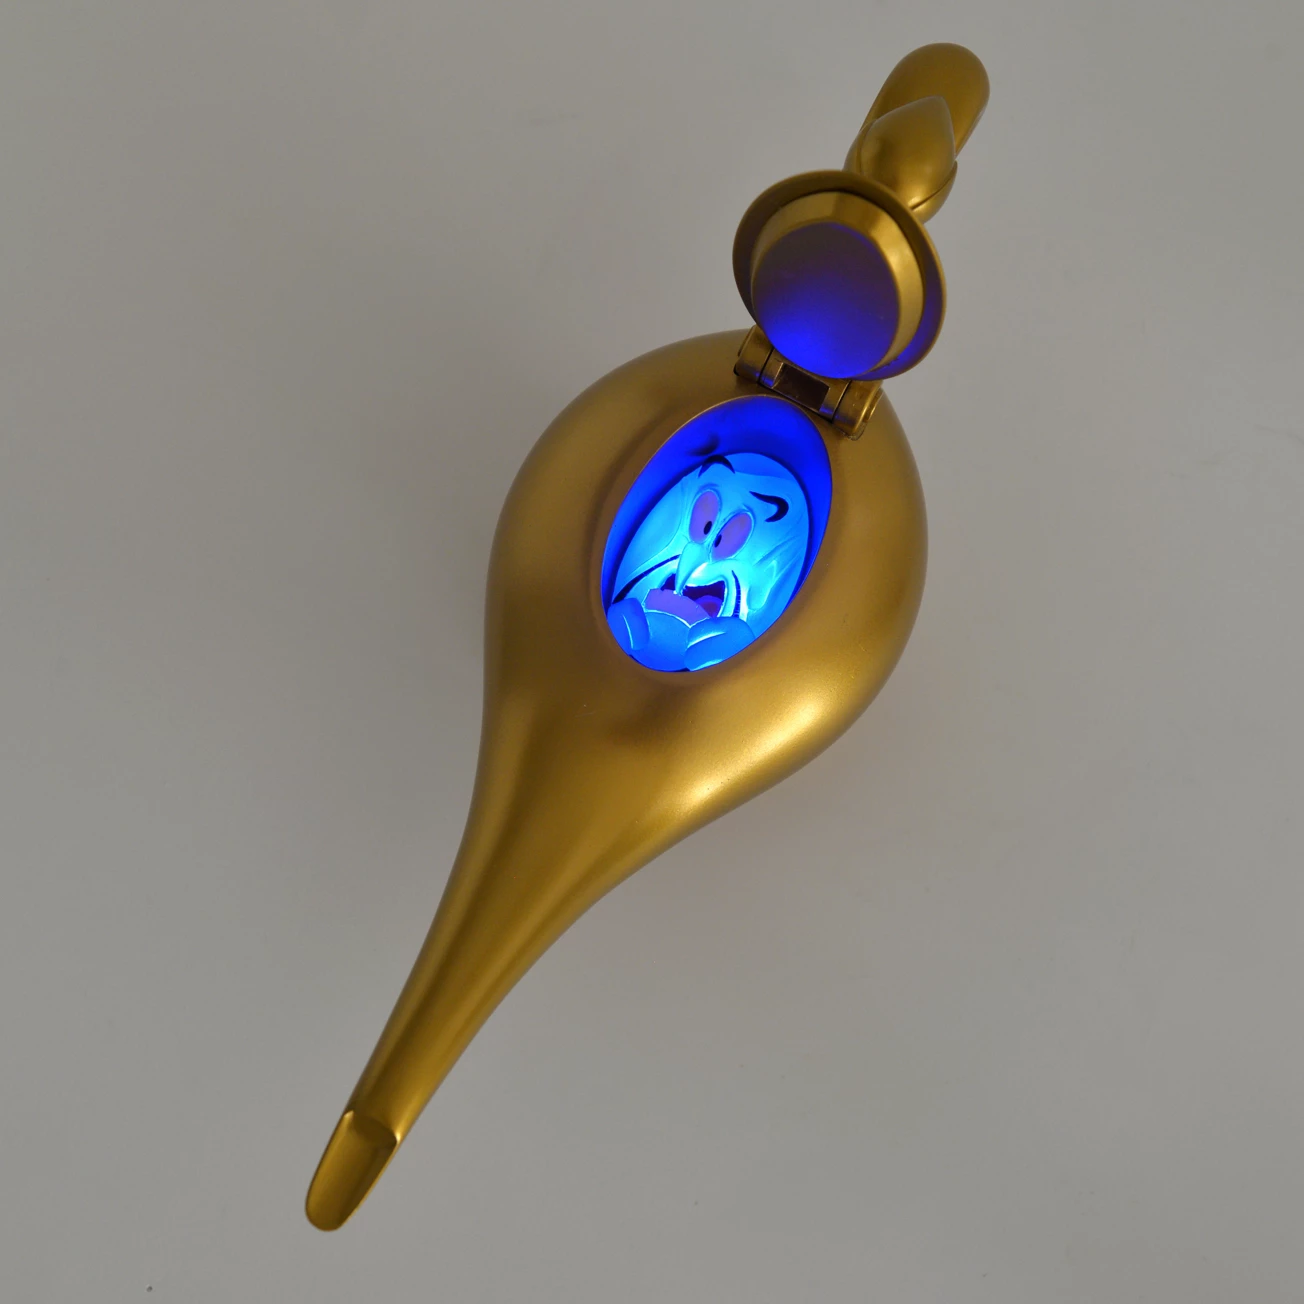 SDJ - Aladdin 30th Anniversary Collection - LED light